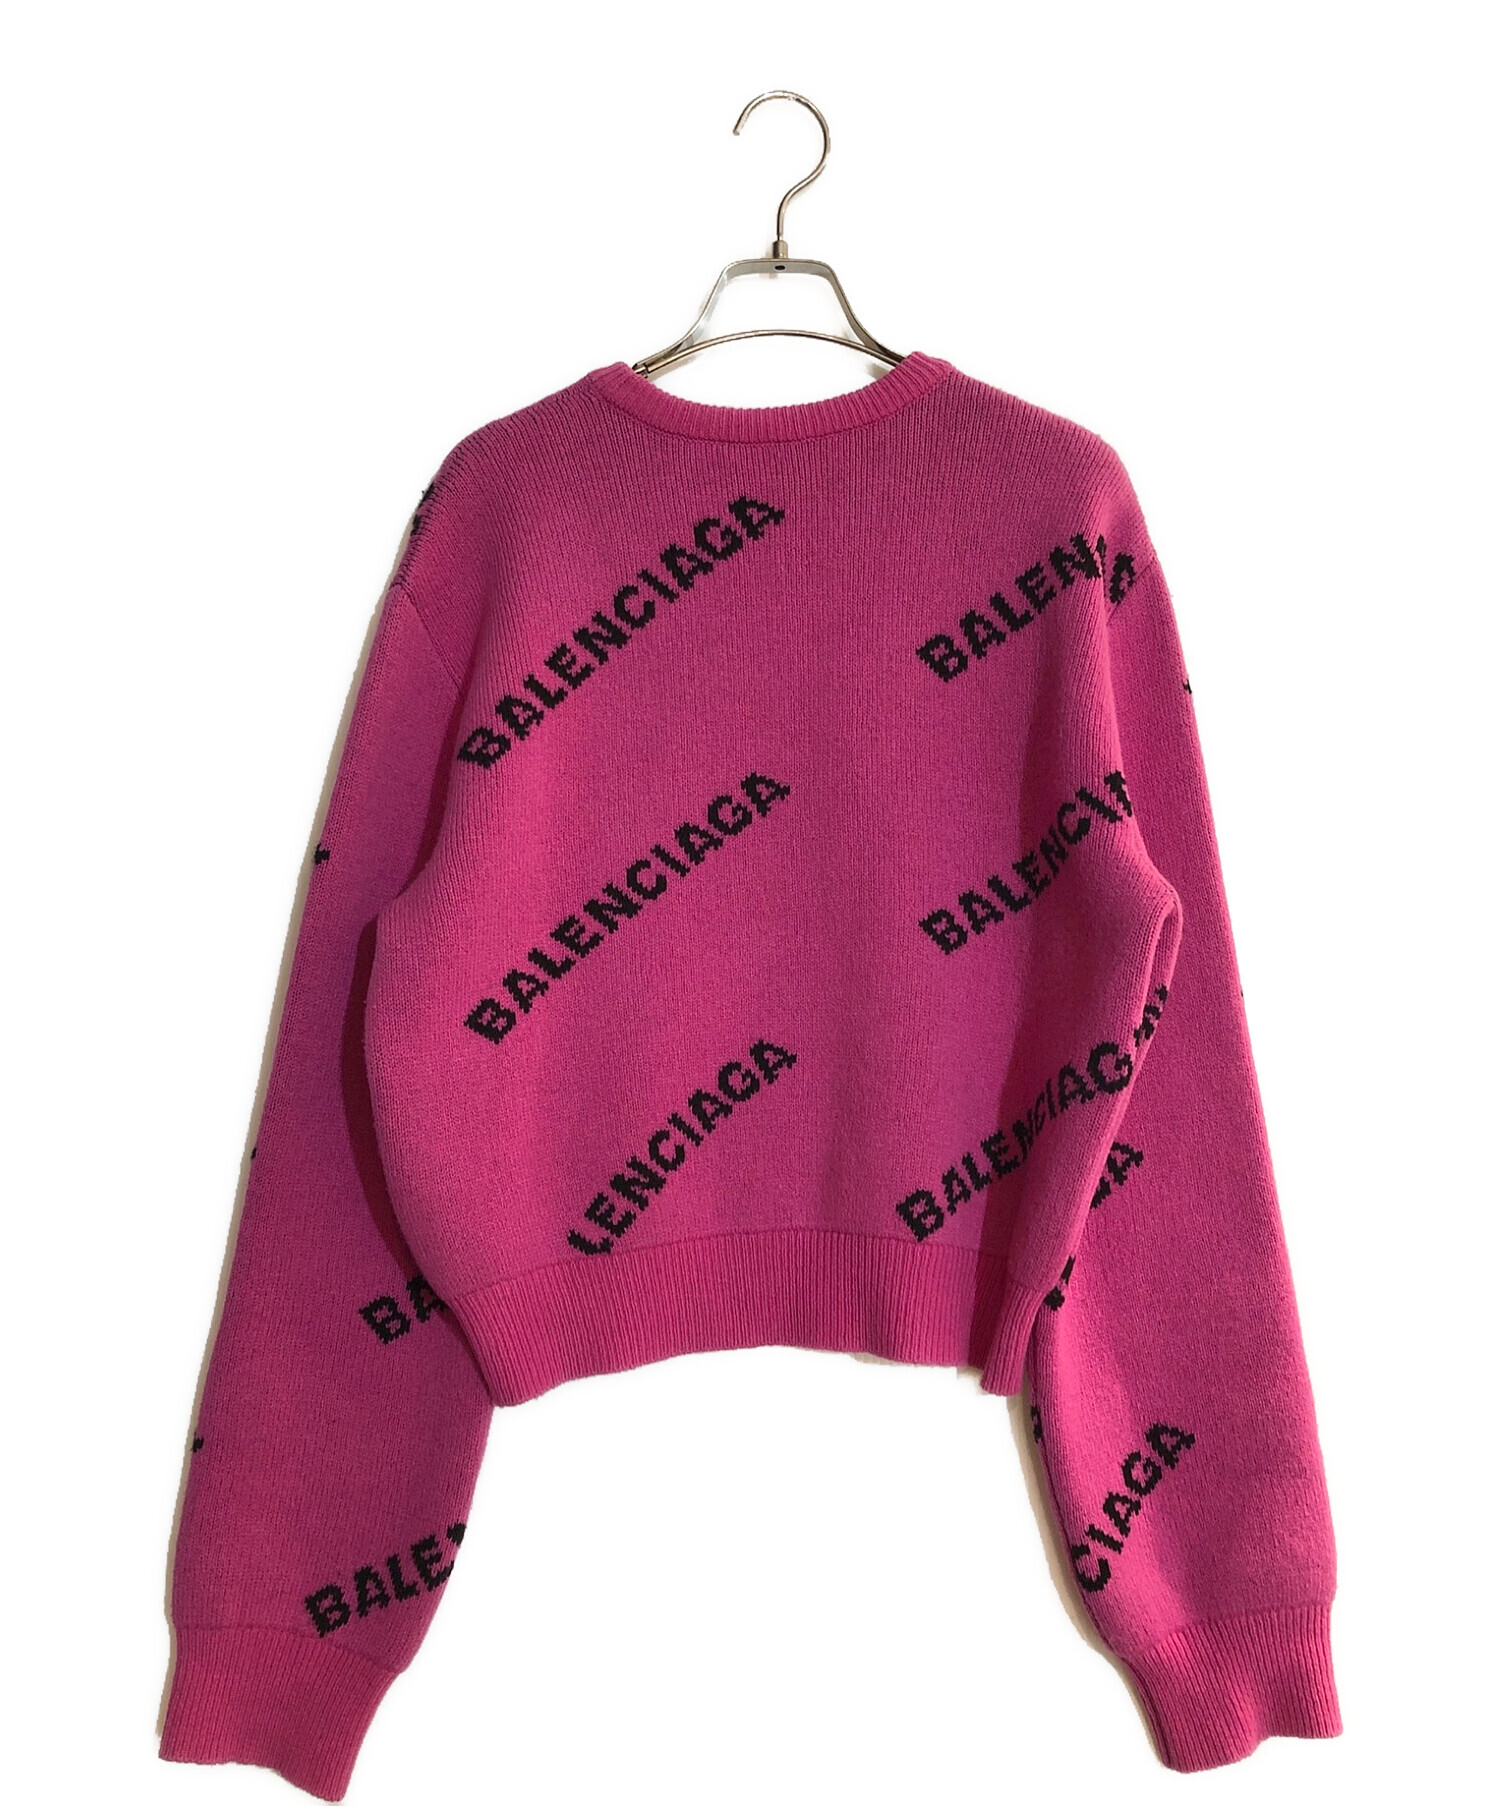 BALENCIAGA (バレンシアガ) オールオーバーロゴセーター ピンク サイズ:34